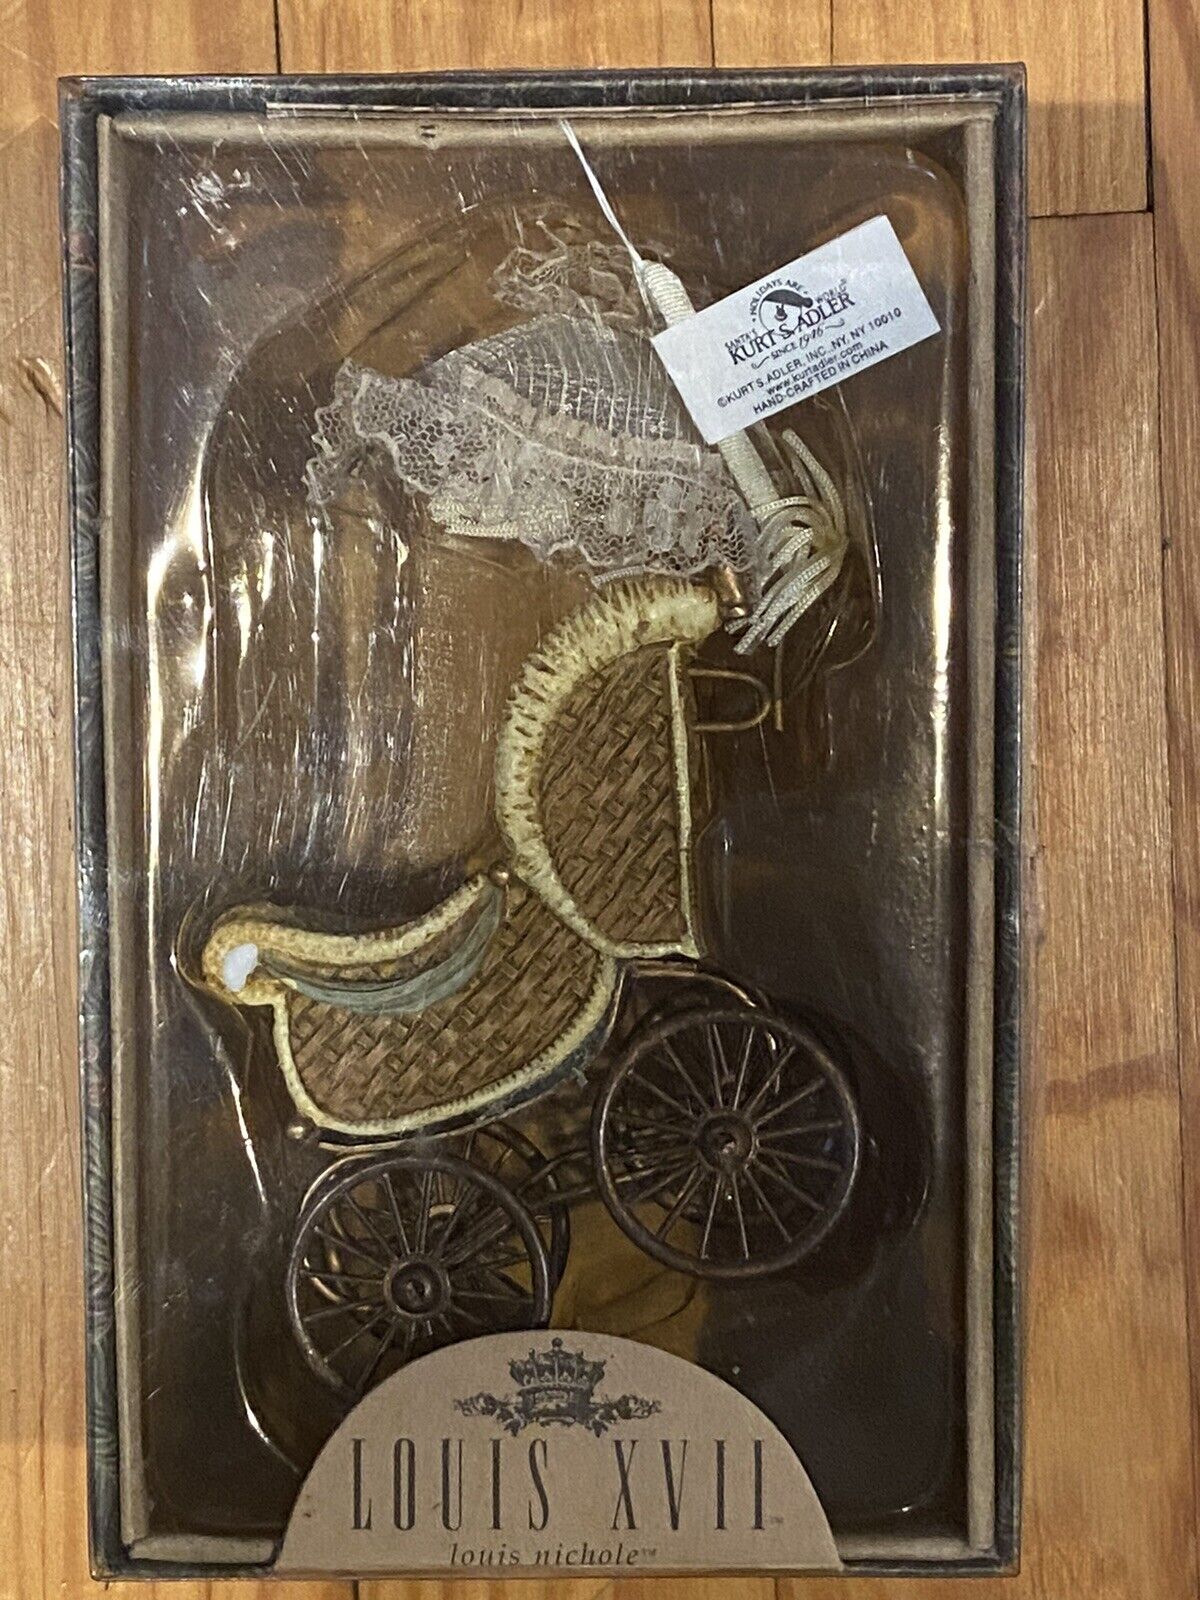 Vintage Kurt Adler Louis Nichole Victorian Baby Carriage Pram Ornament 2000 5”